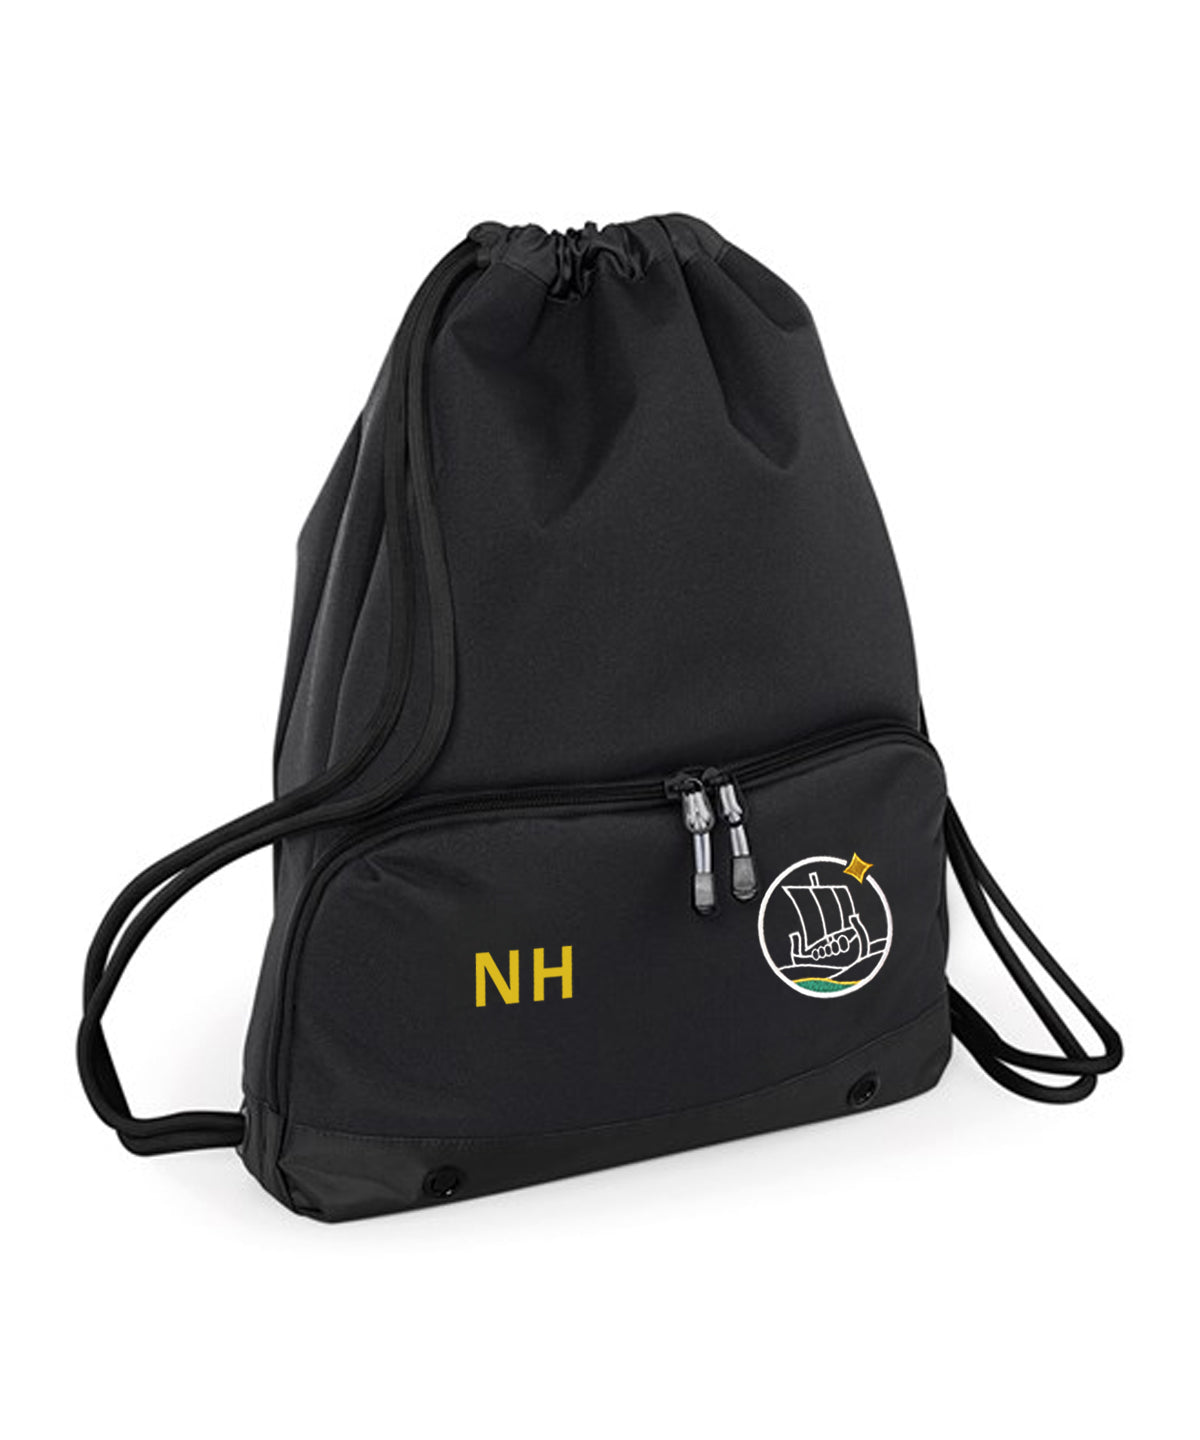 Neston High Premium Kit Bag XL